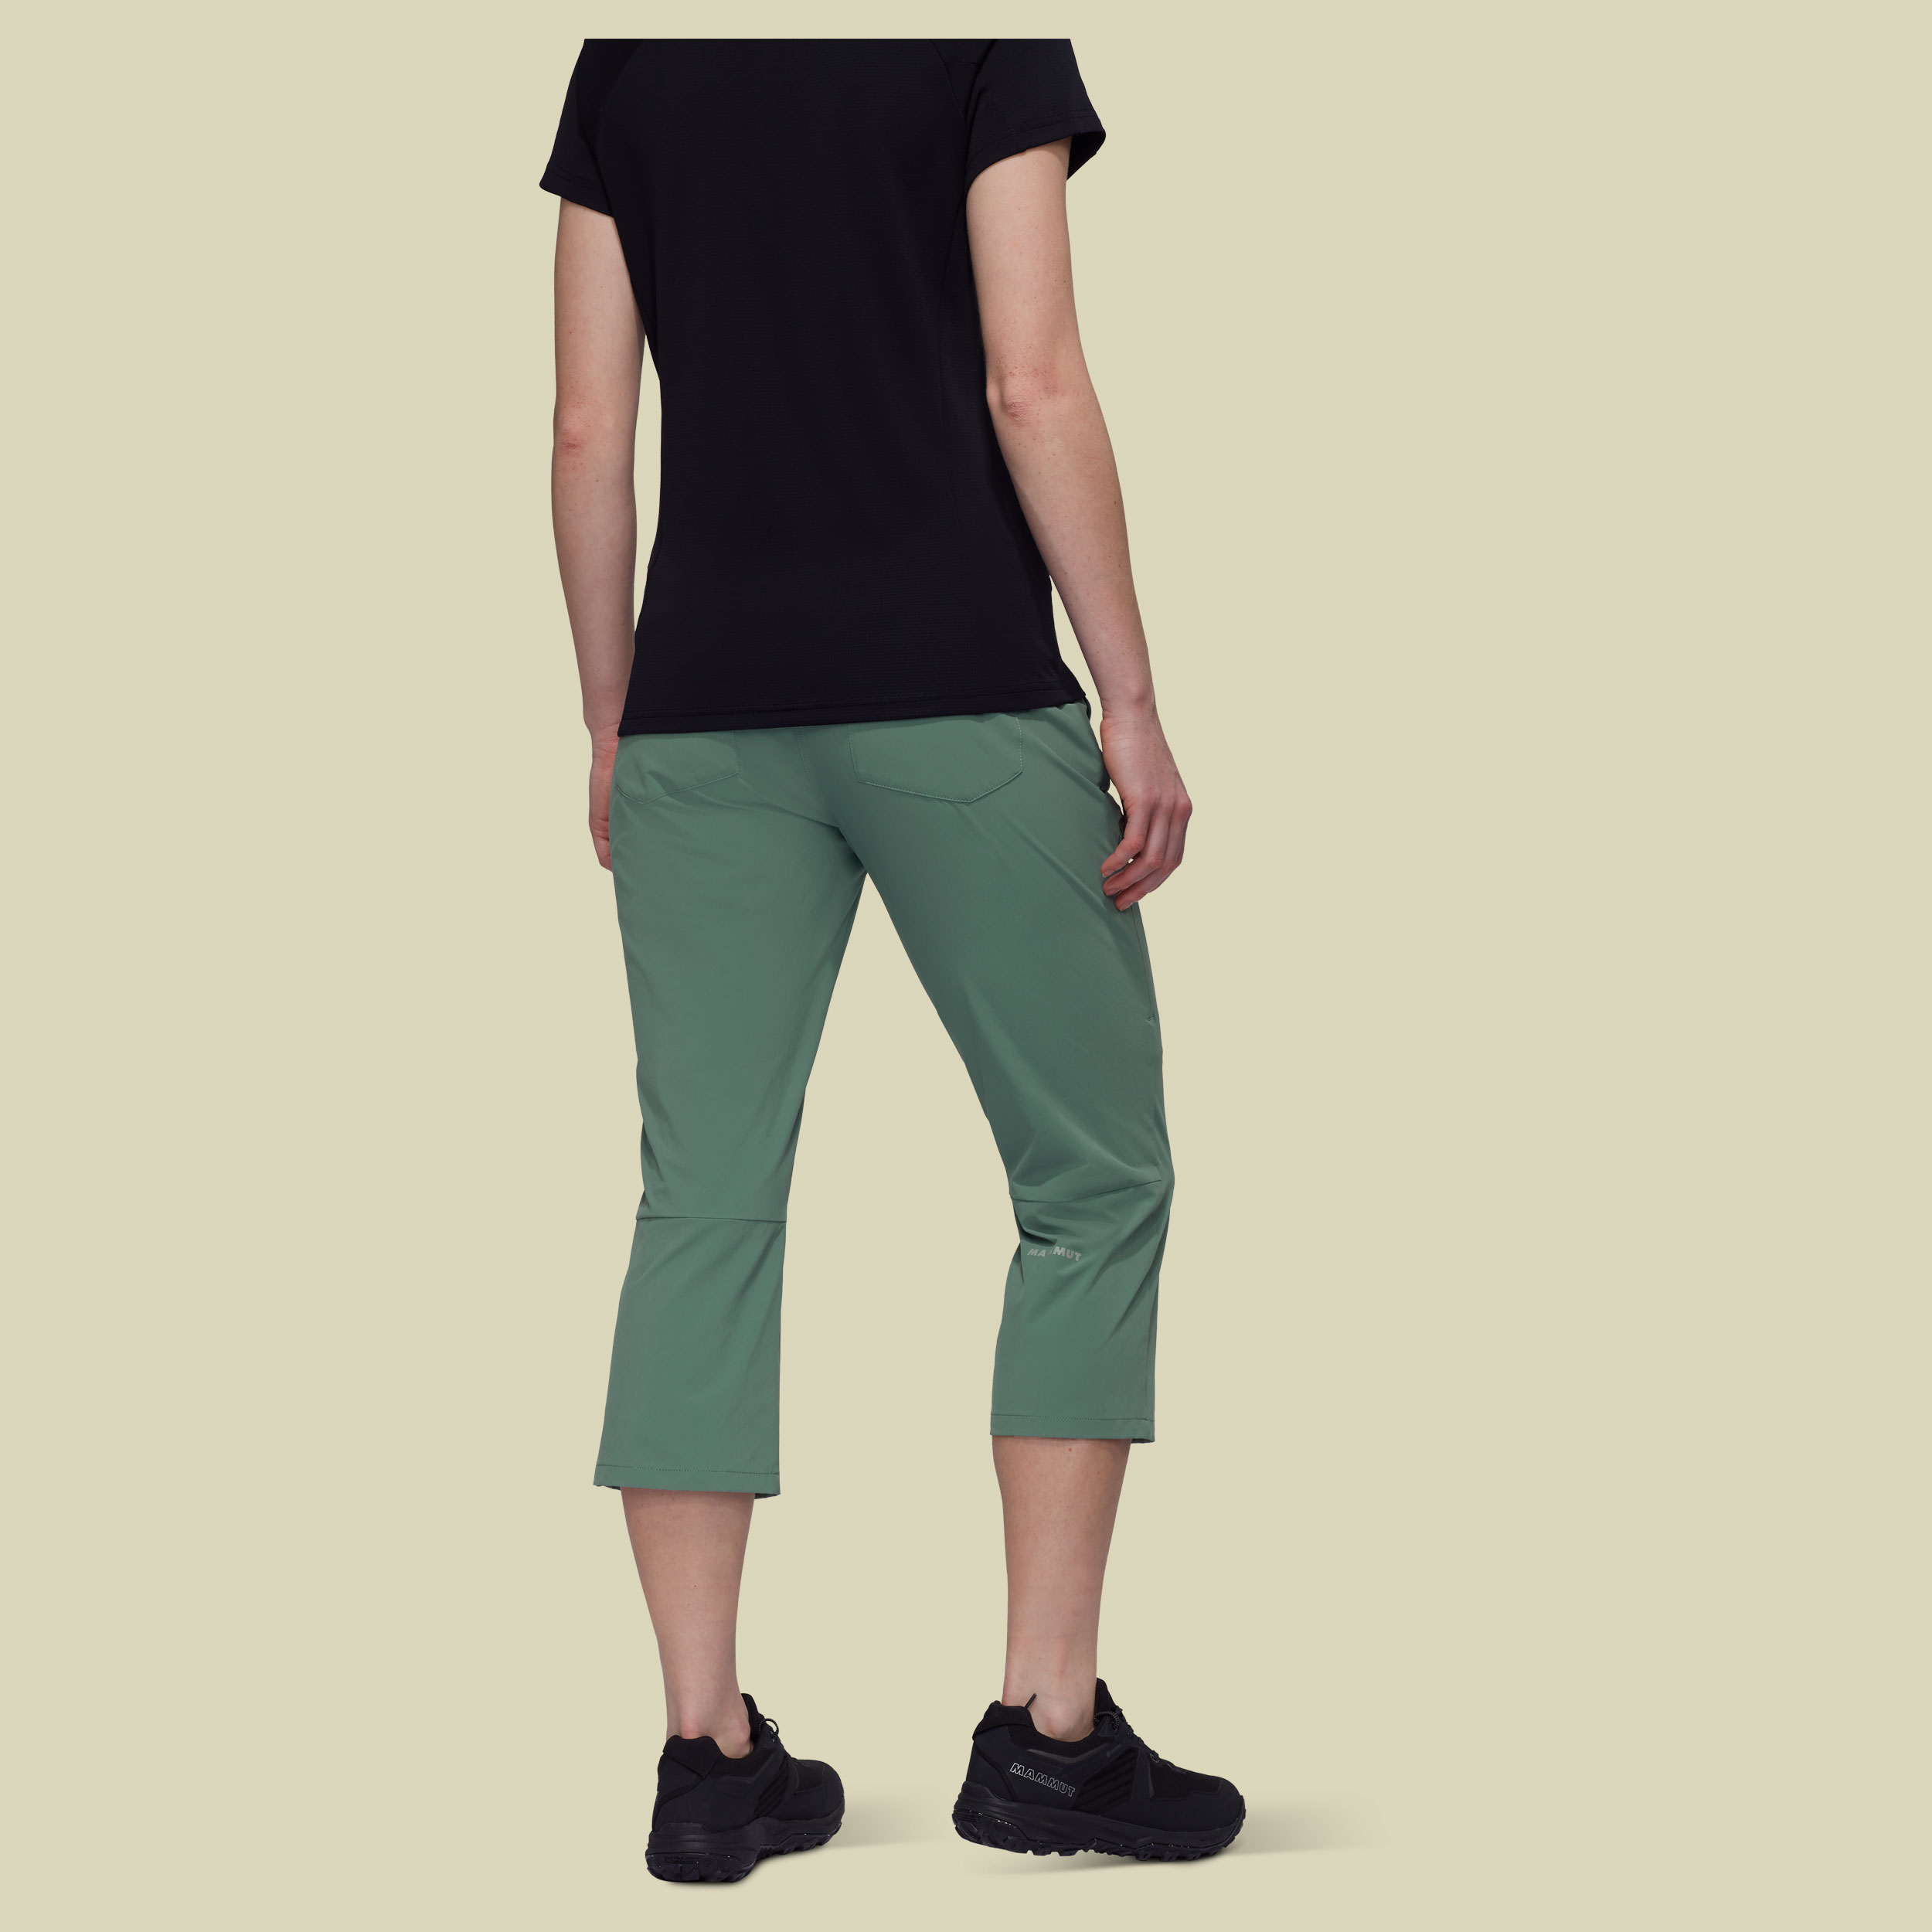 Runbold Capri Pants Women grün 38 - dark jade